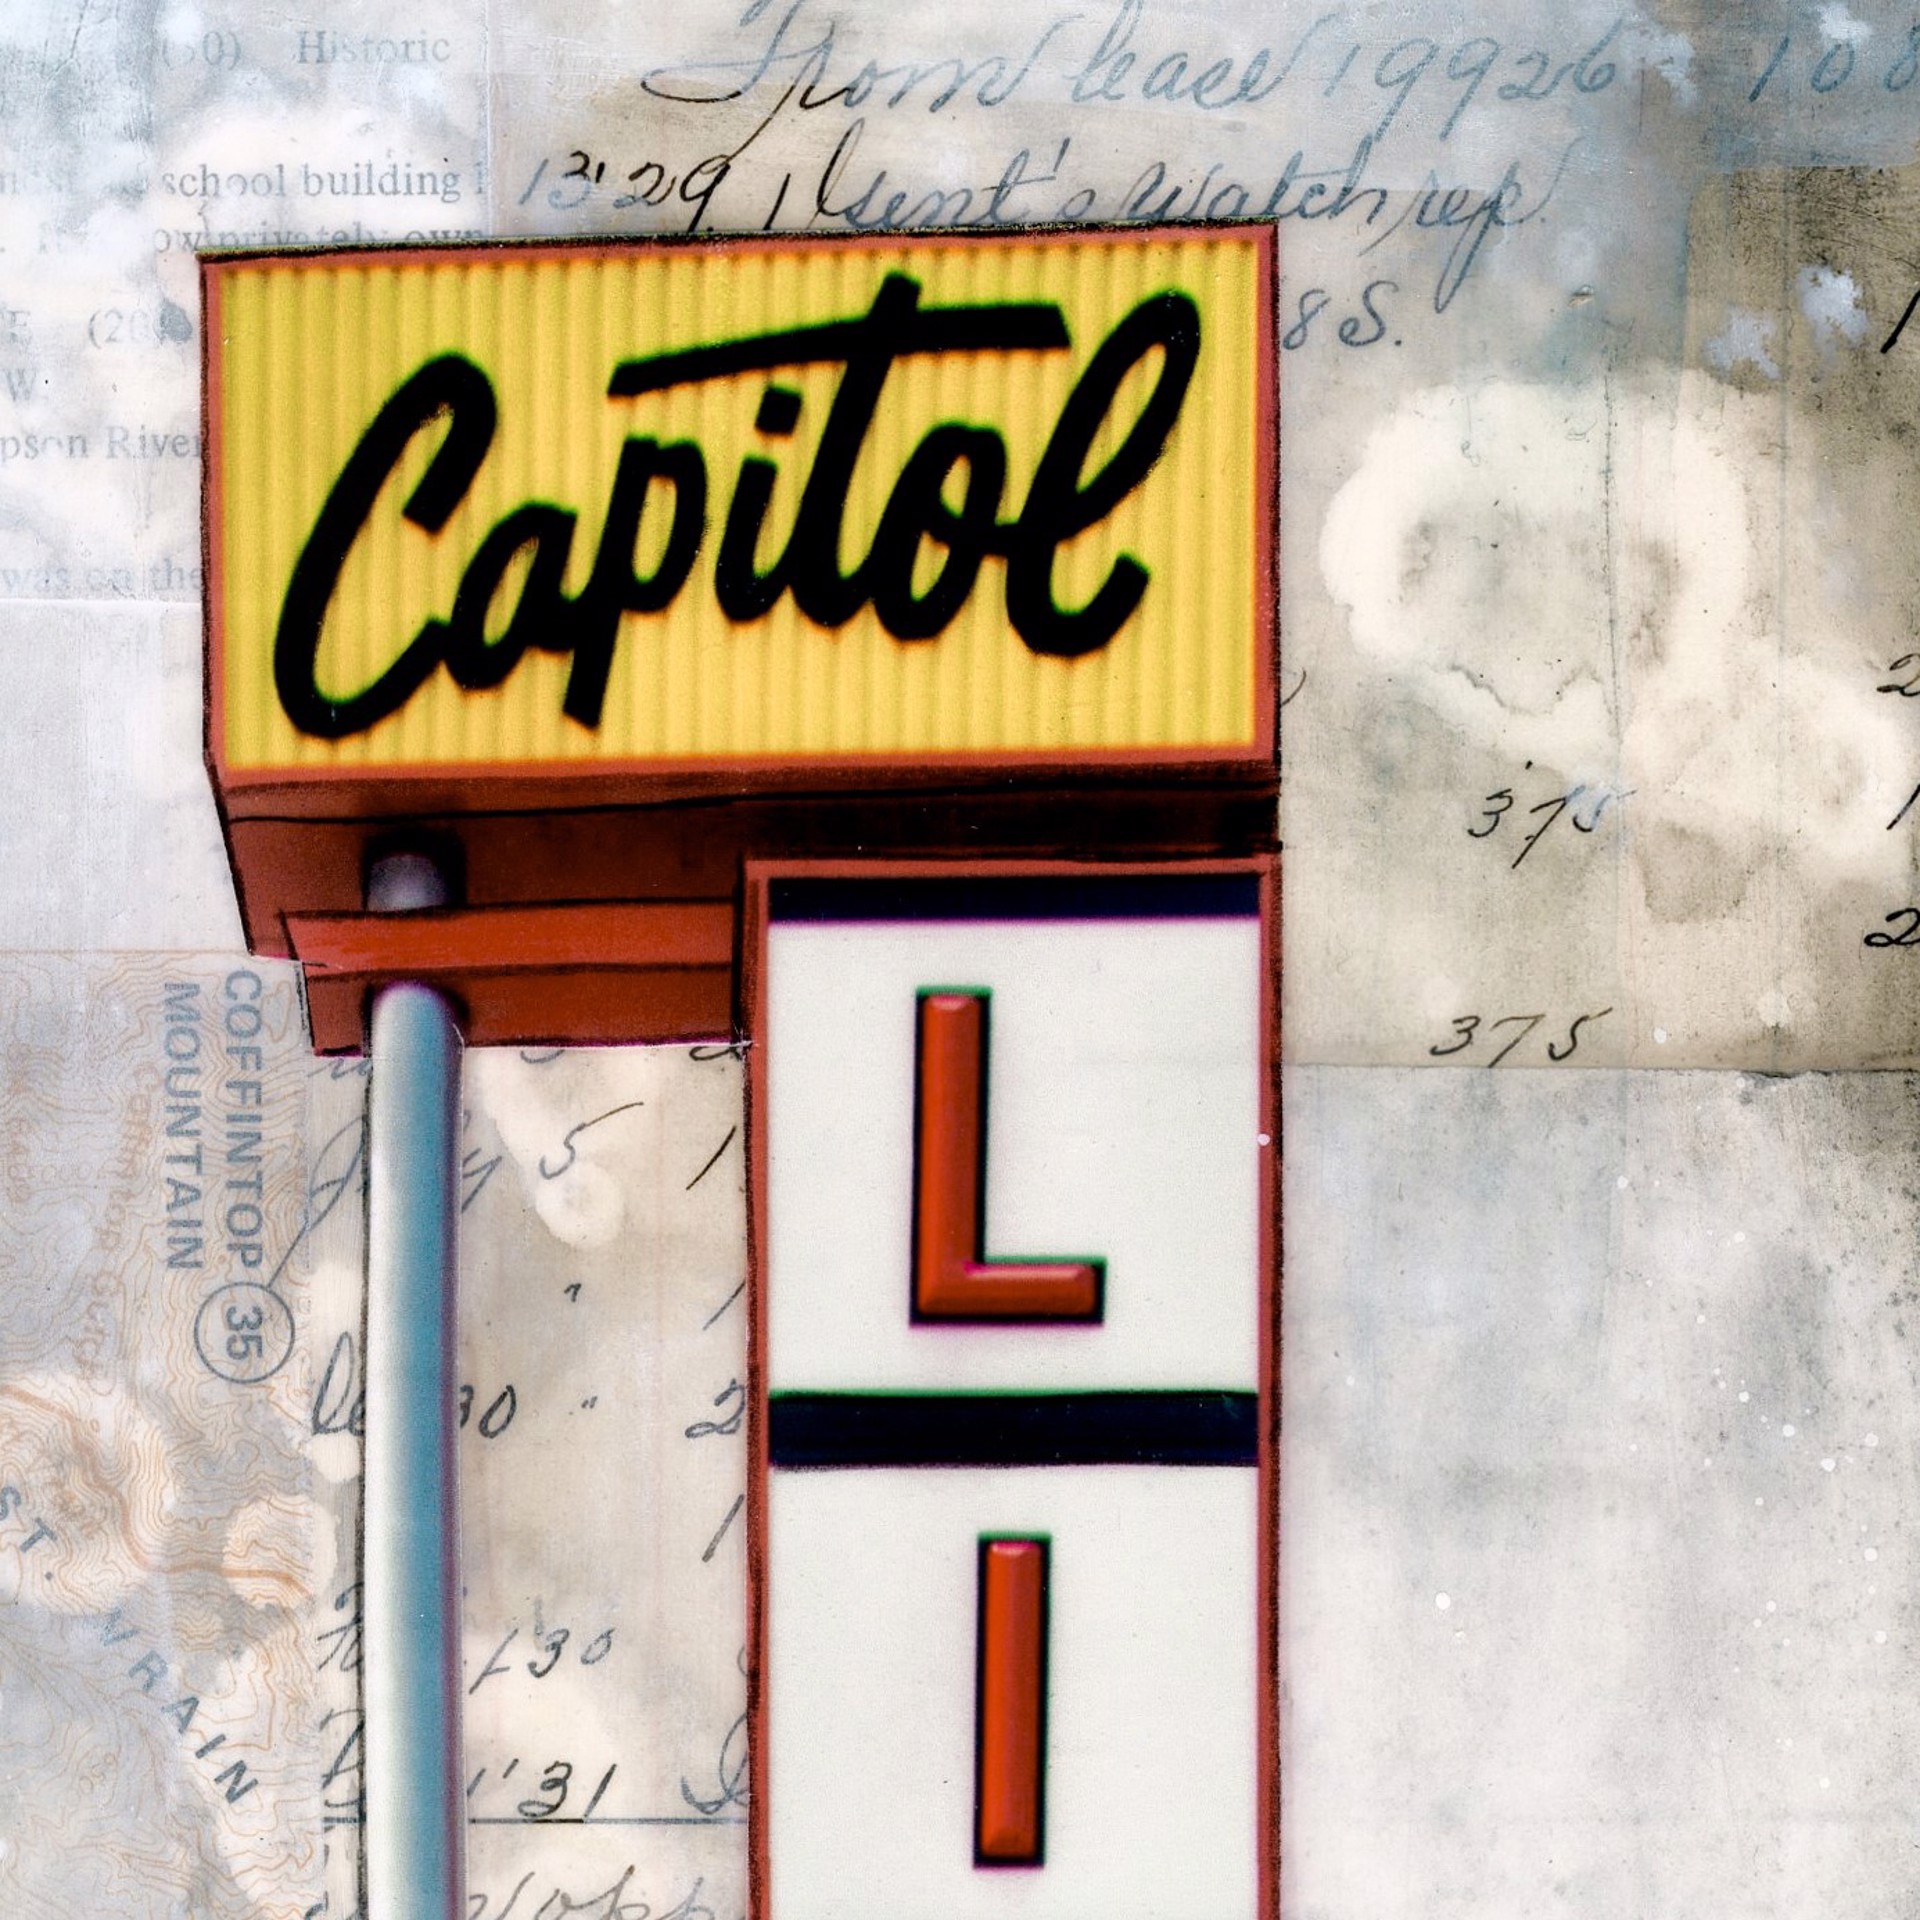 Capitol Liquor by JC Spock